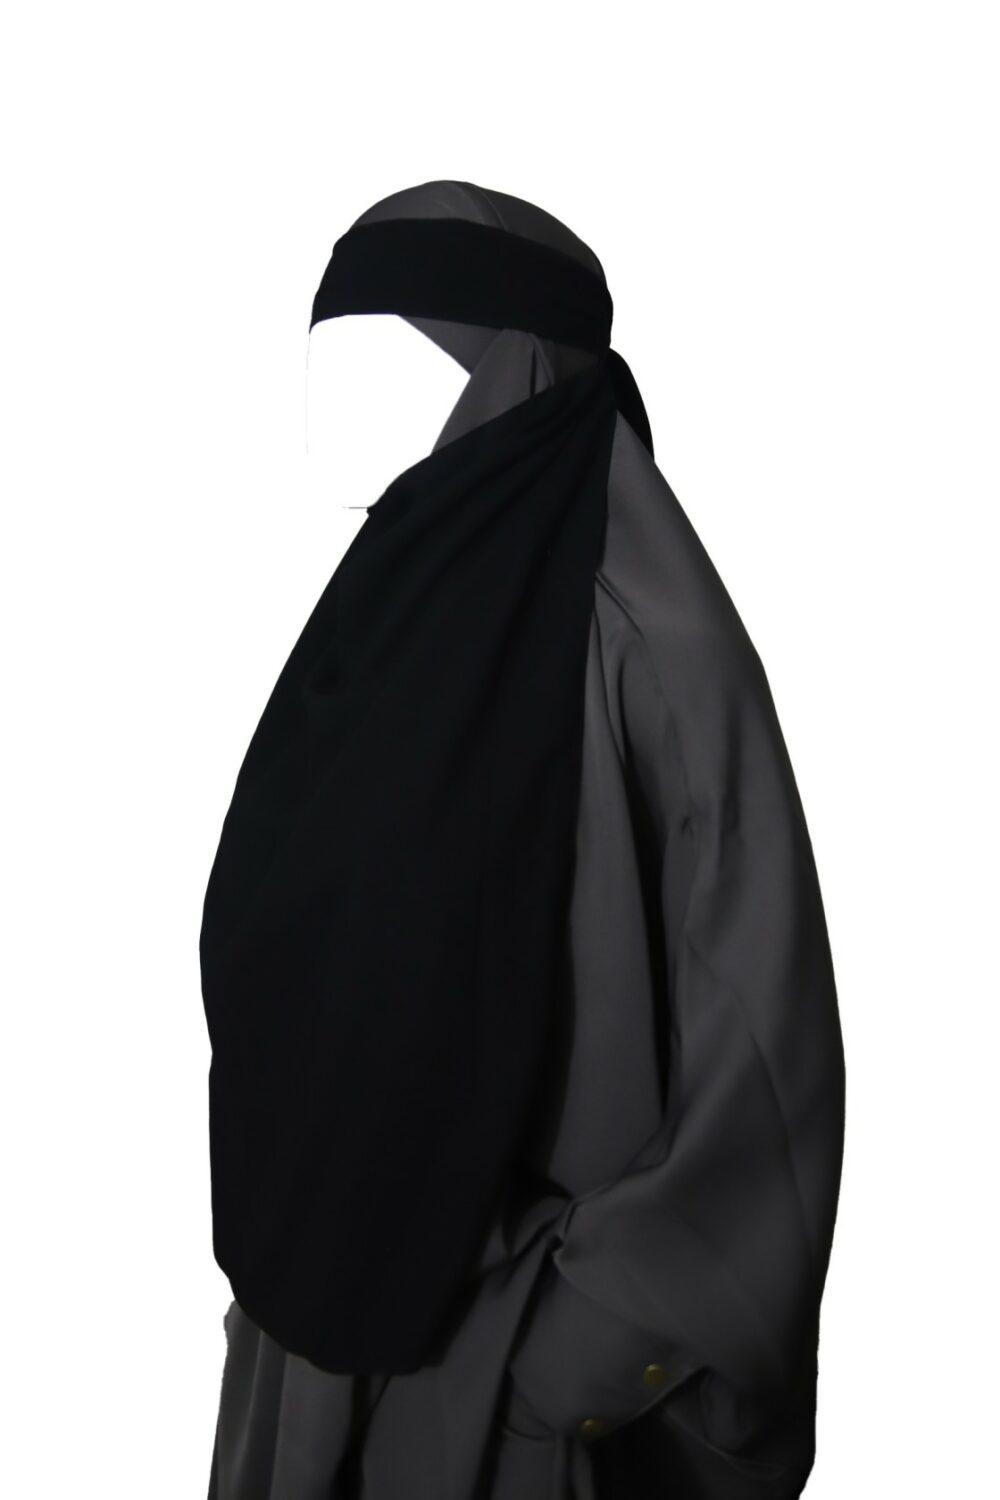 pull down niqab show face